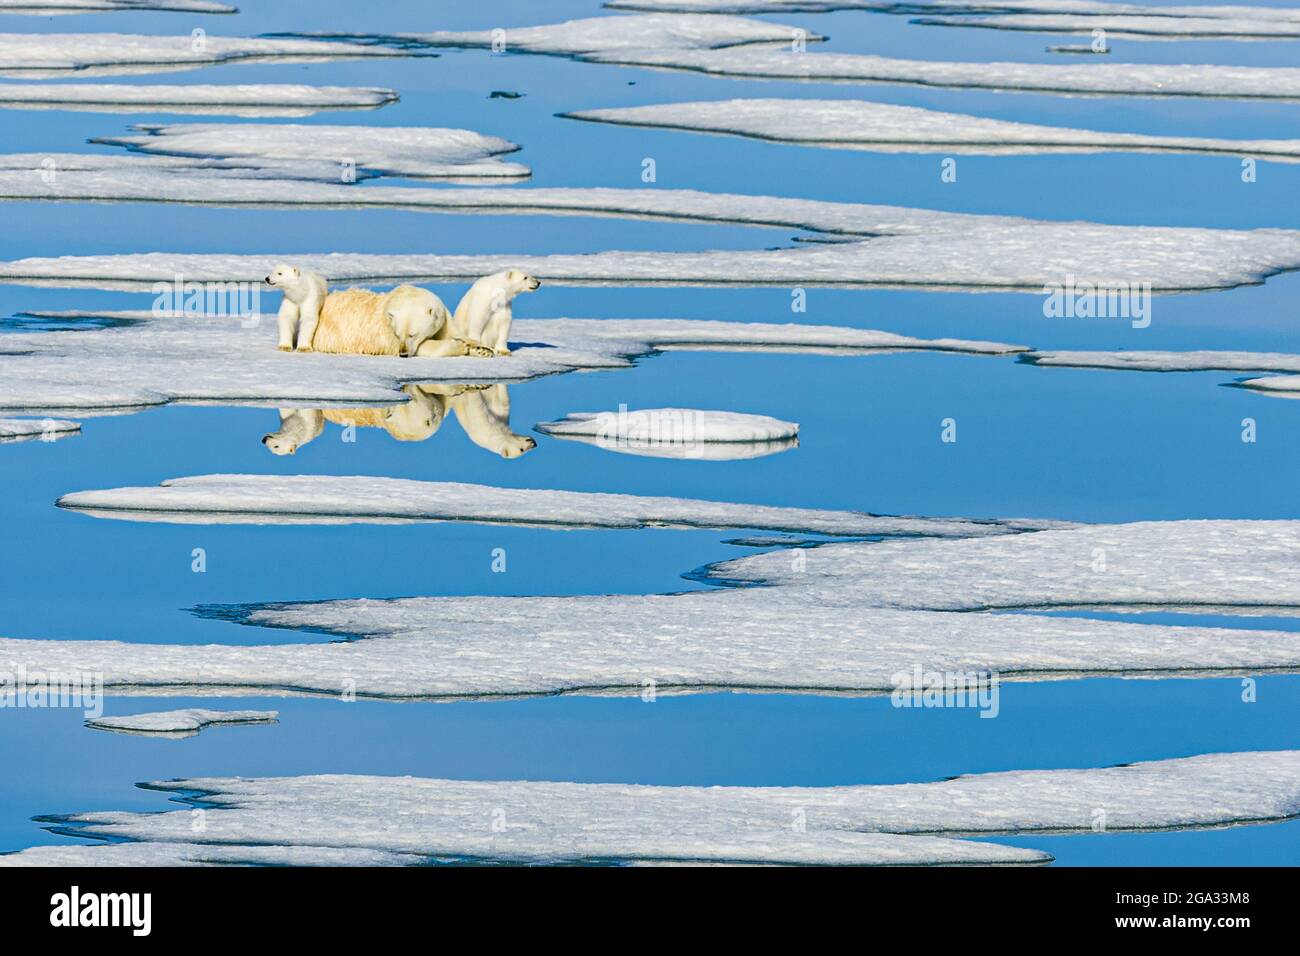 https://c8.alamy.com/comp/2GA33M8/blue-water-pools-polar-bear-ursus-maritimus-with-cubs-on-melting-pack-ice-svalbard-norway-2GA33M8.jpg